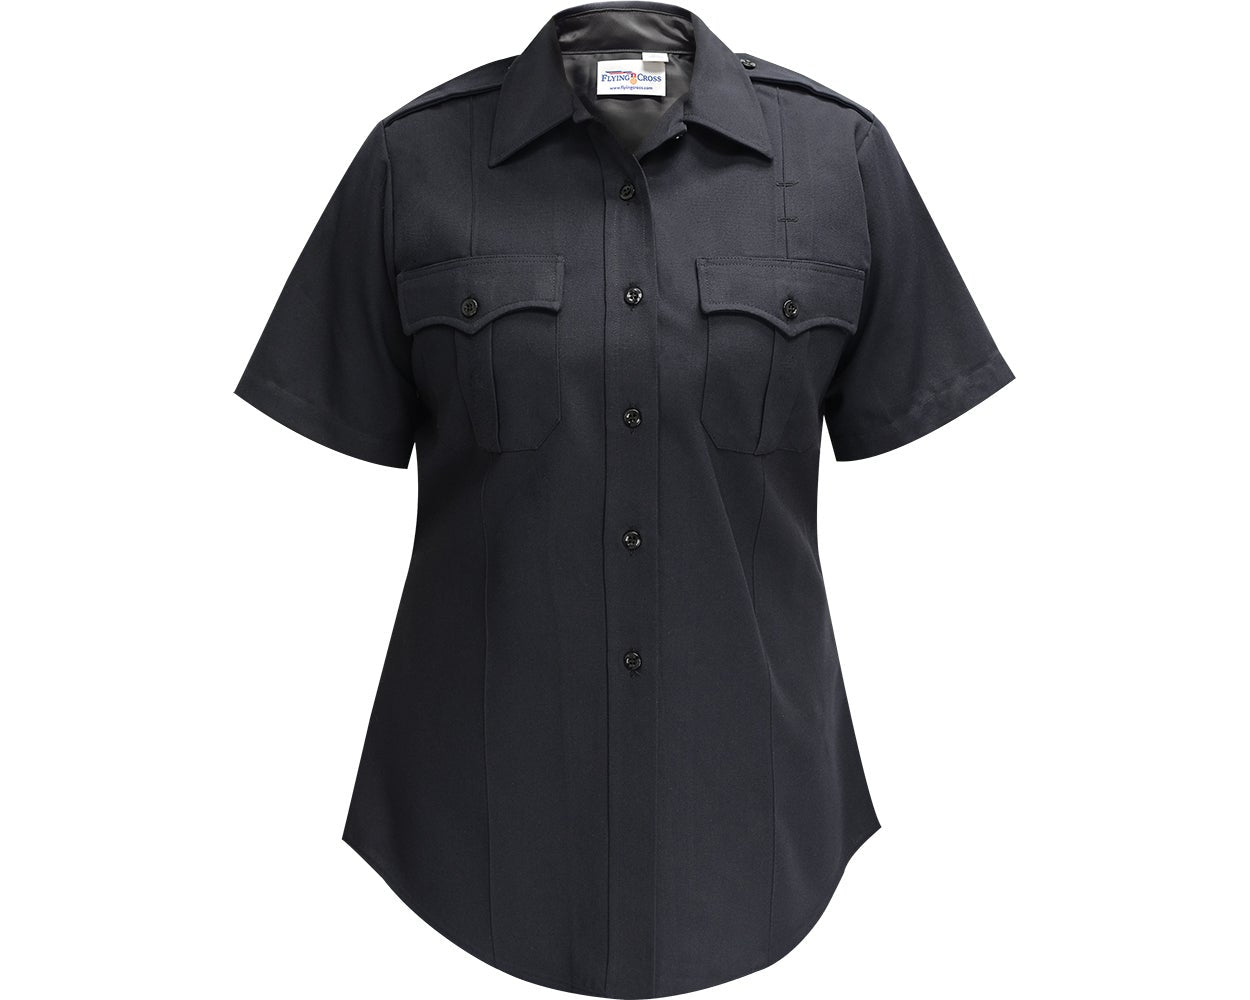 Flying Cross Command Women's 100% Polyester Short Sleeve Uniform Shirt 176R78 - Black, 38